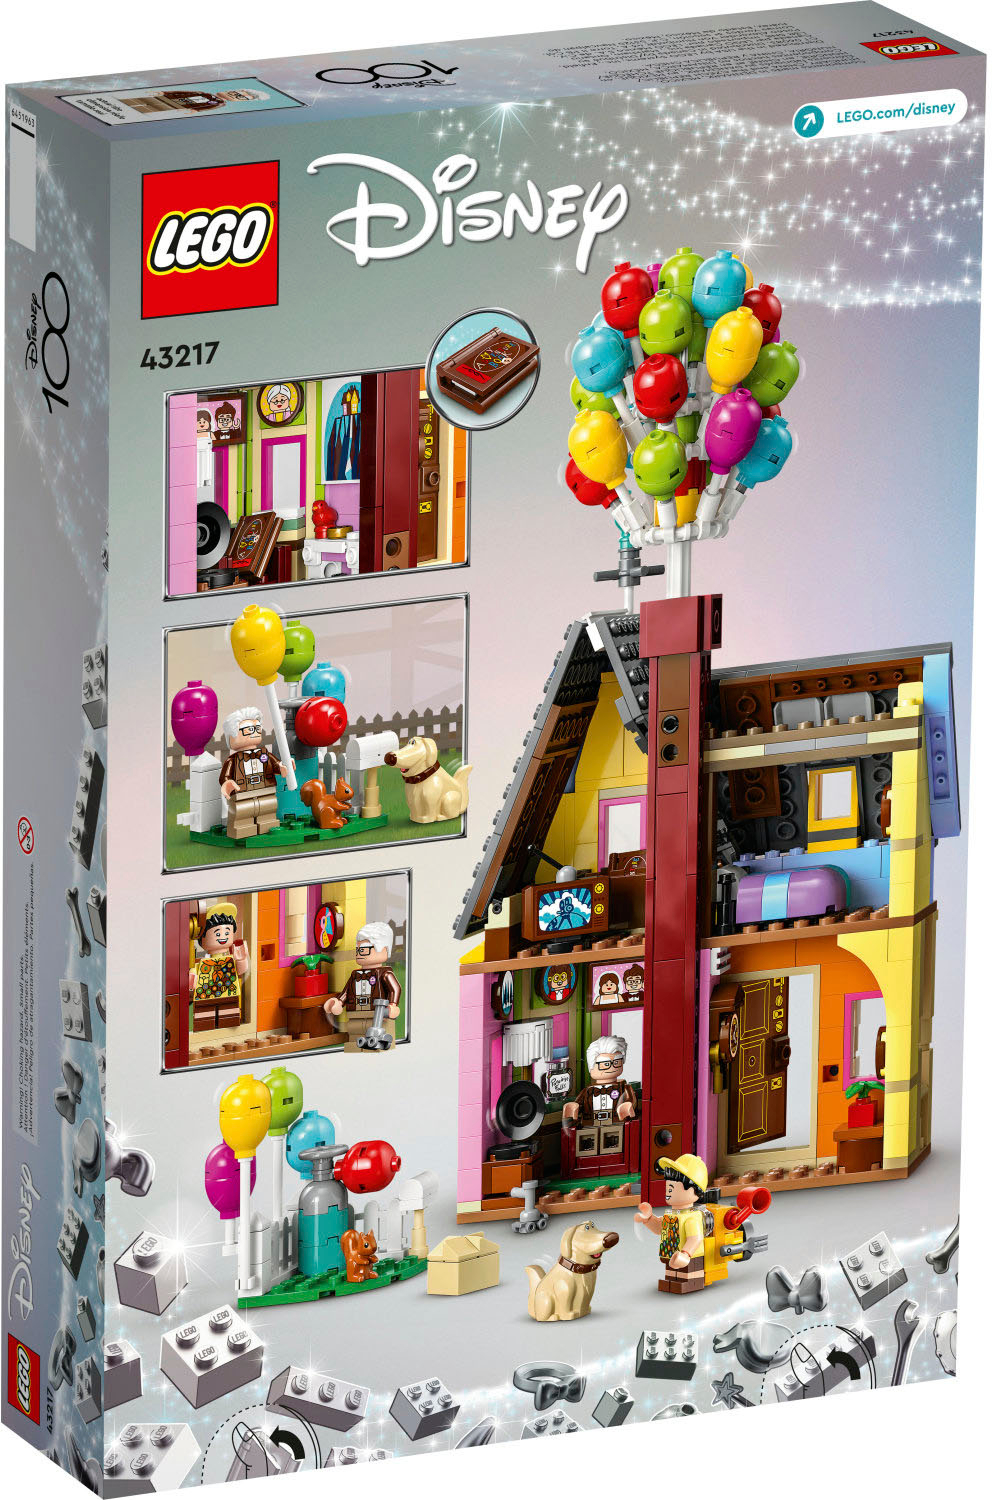 LEGO Pixar Up House 43217 Disney 100 Anniversary 2023 Brand New in